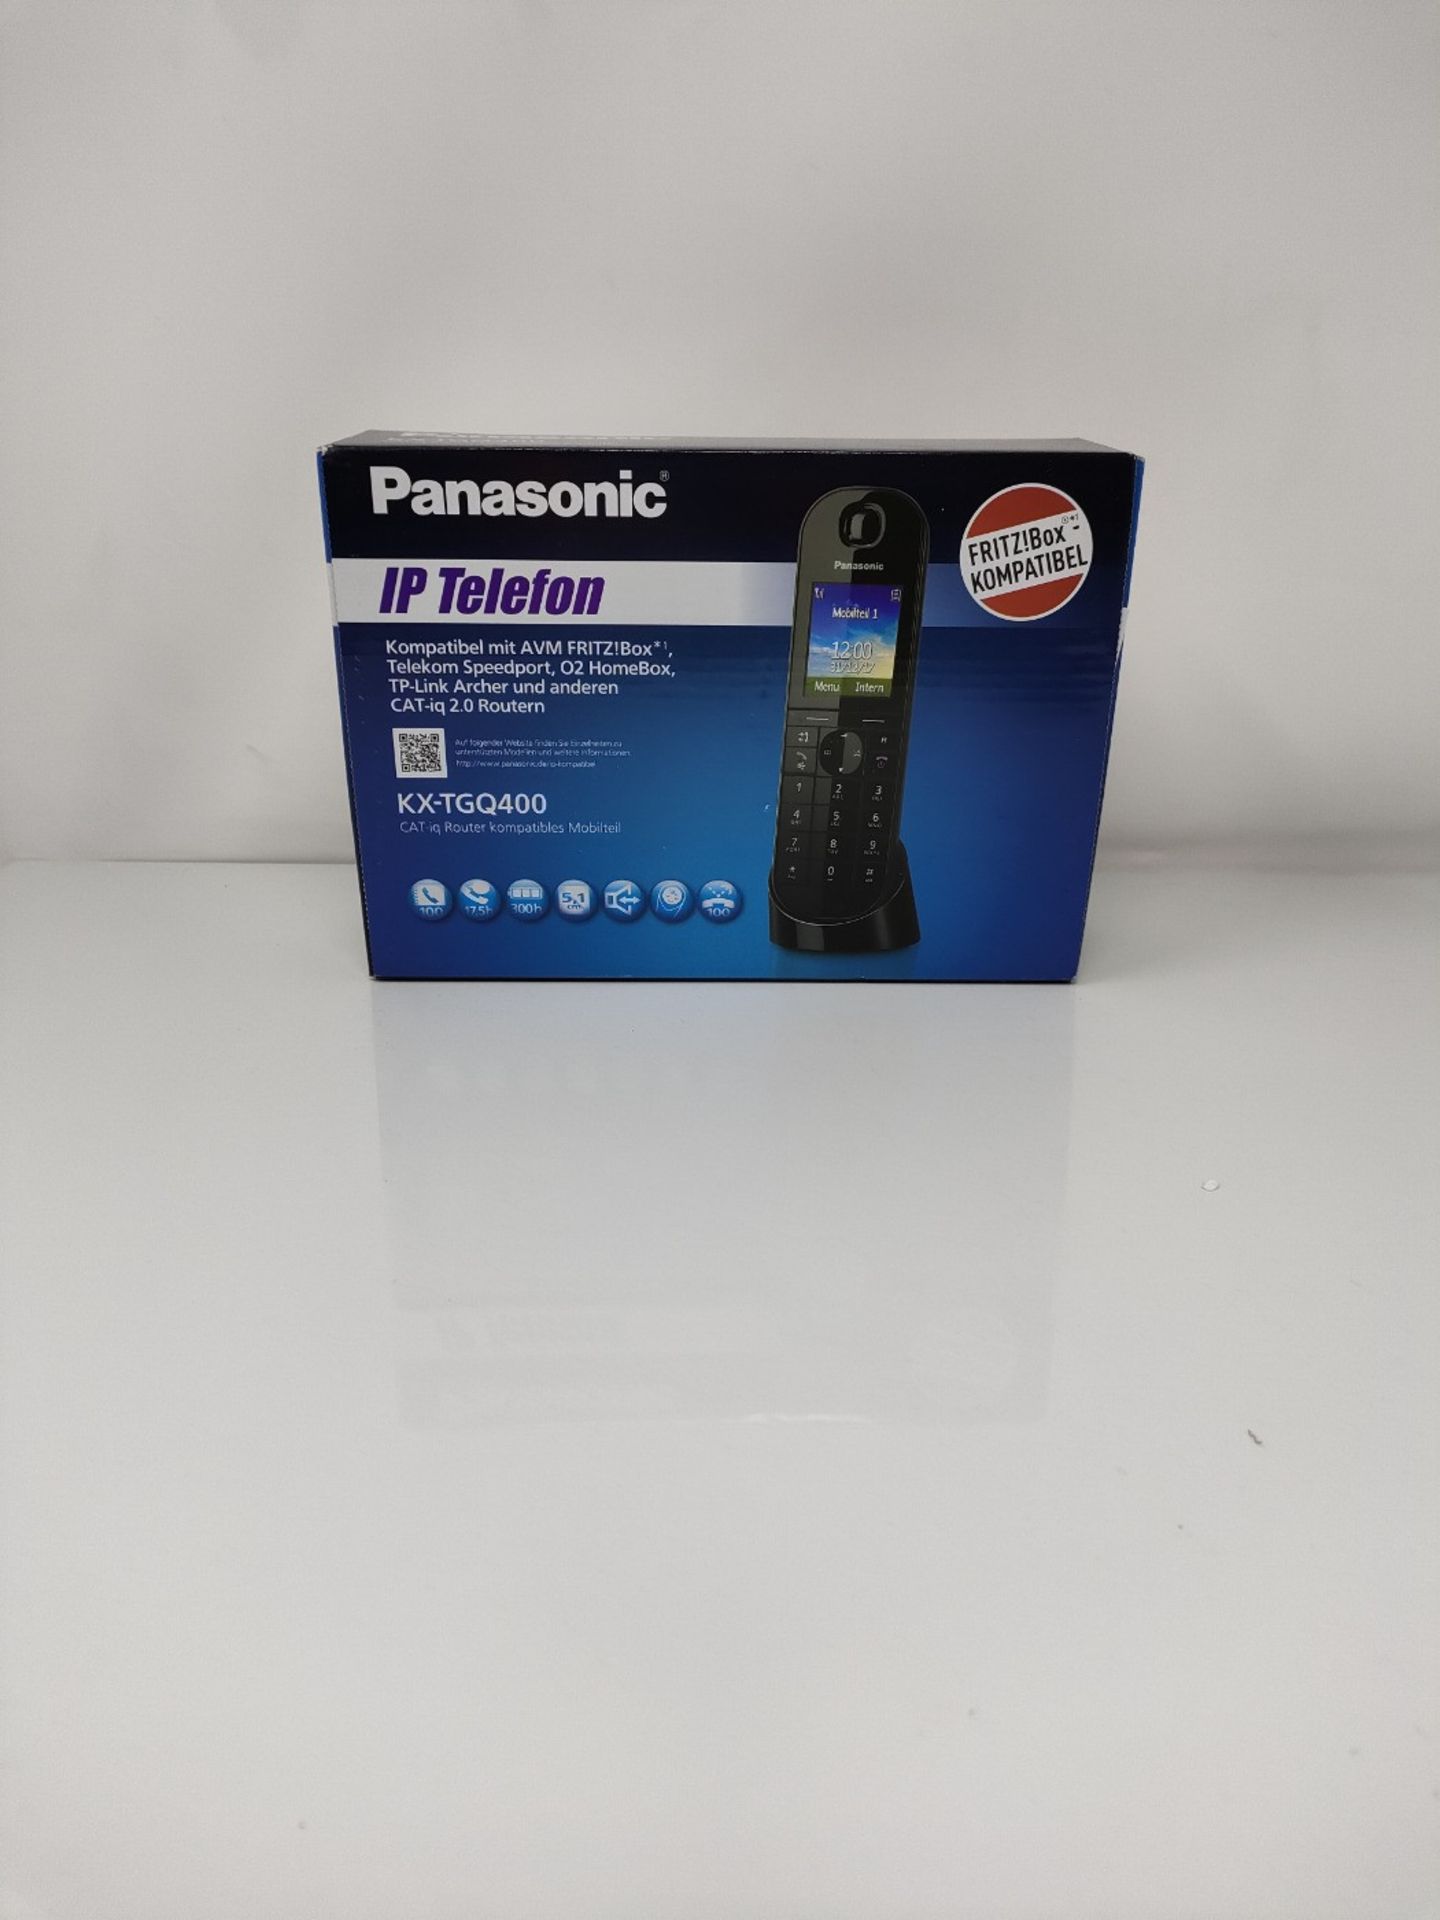 Panasonic KX-TGQ400GB DECT IP telephone (cordless, CAT-iq 2.0 compatible, hands-free m - Image 2 of 3